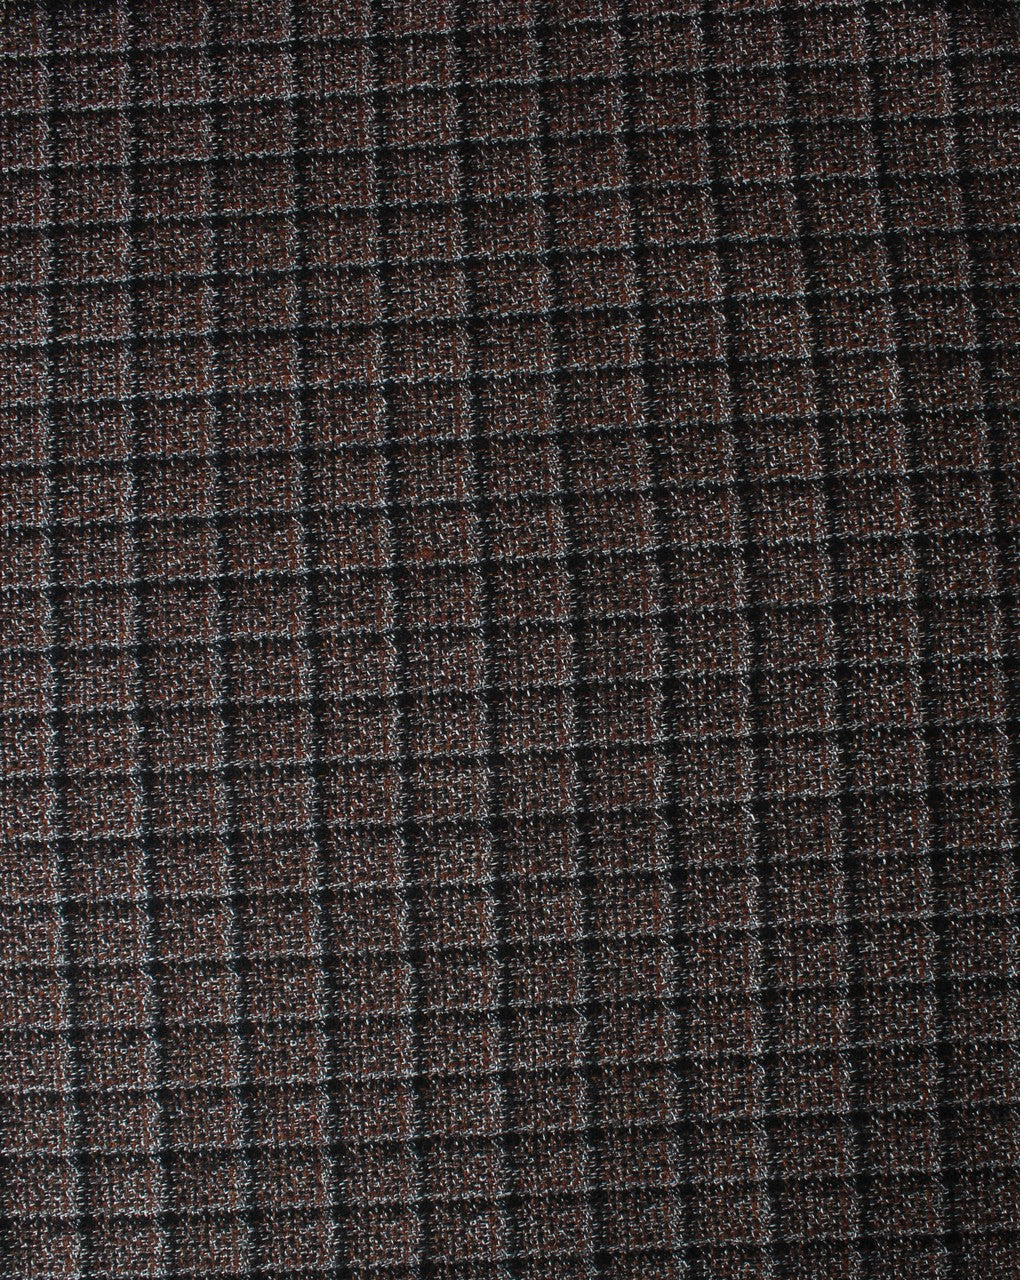 Brown And Black Checks Design Woolen Tweed Fabric